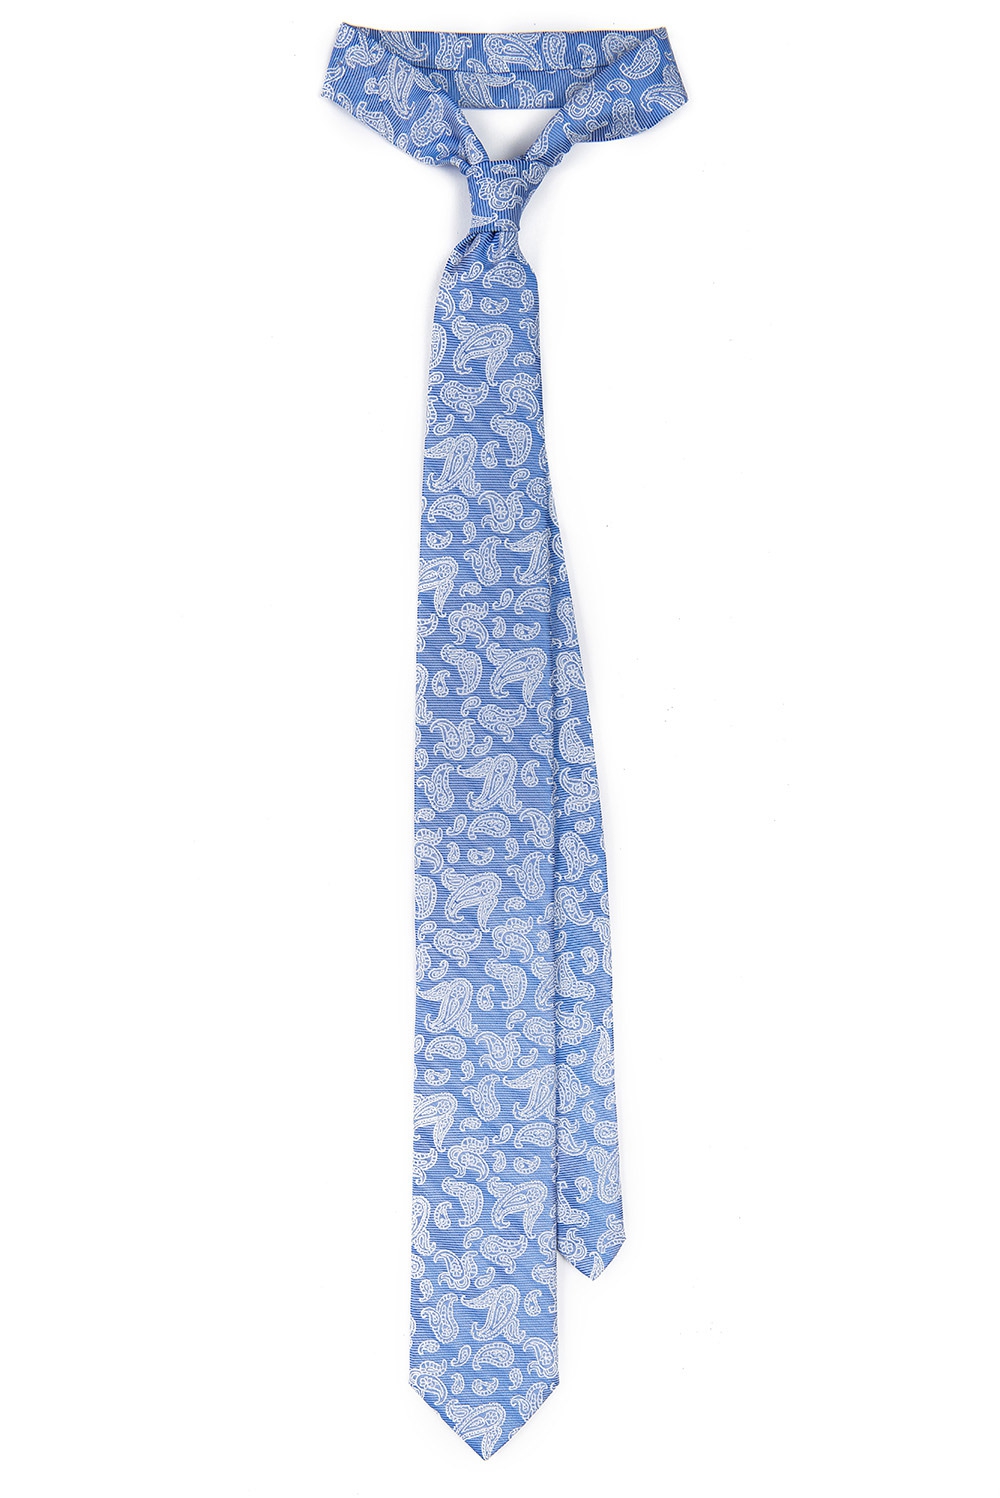 Cravata poliester bleu print lira 0